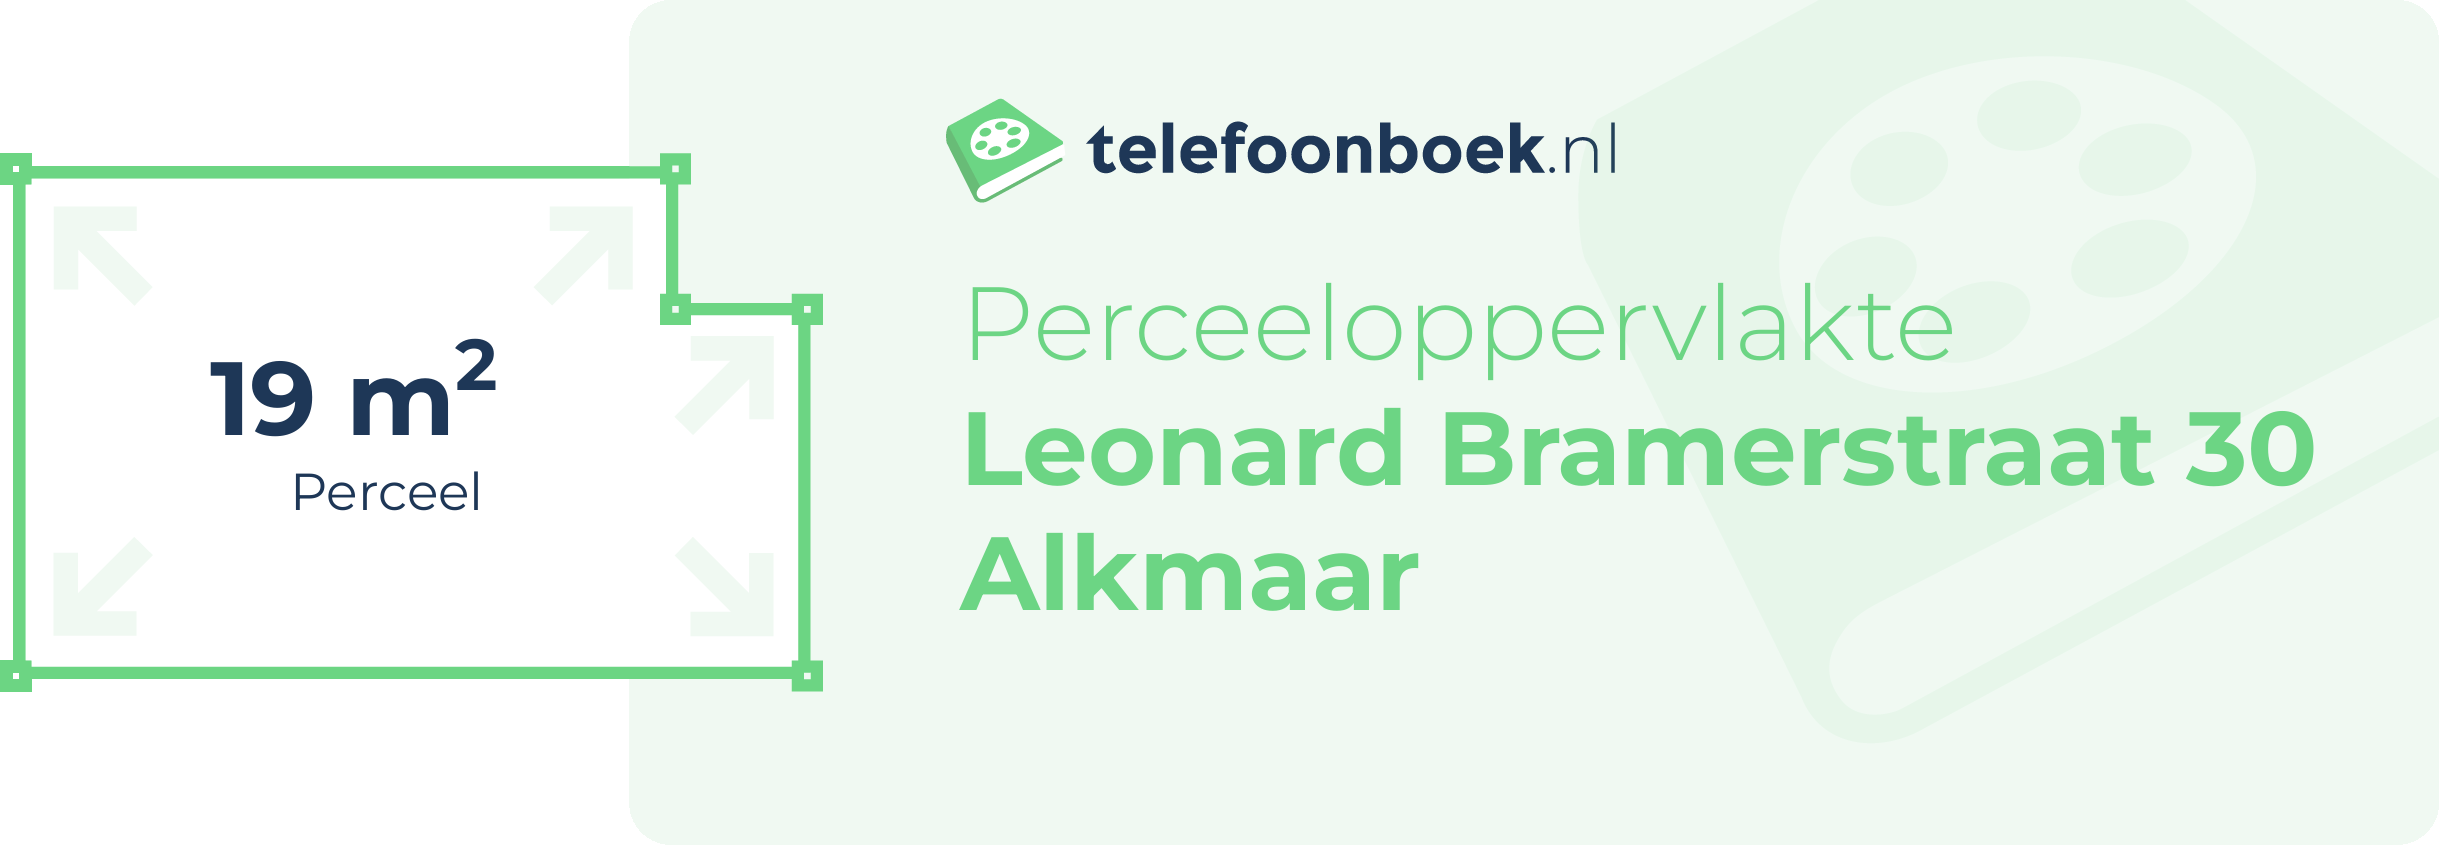 Perceeloppervlakte Leonard Bramerstraat 30 Alkmaar